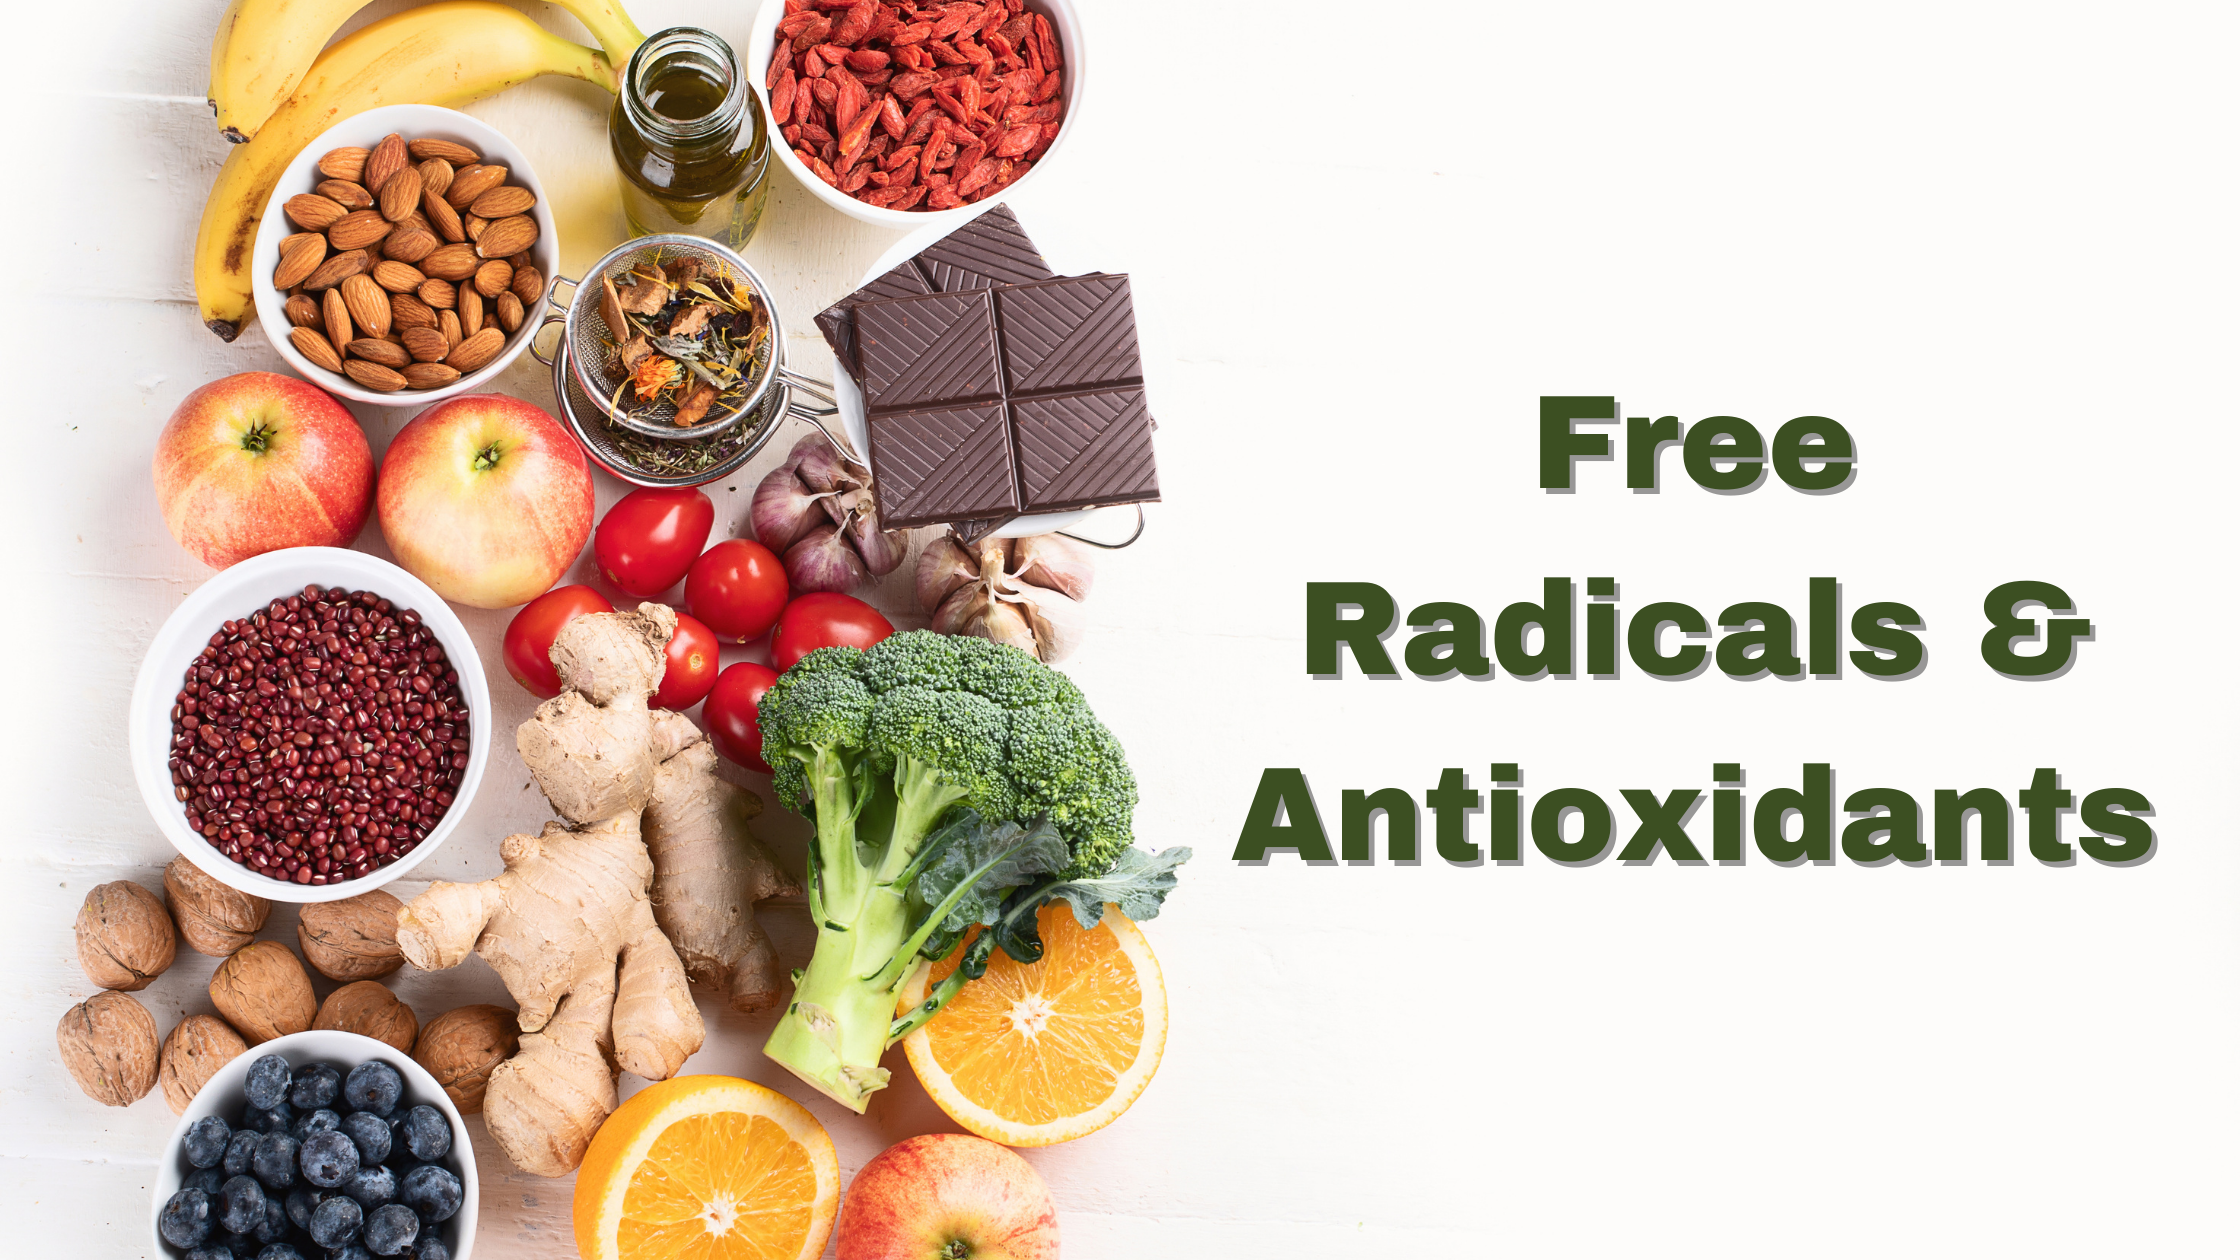 Antioxidant foods and free radicals